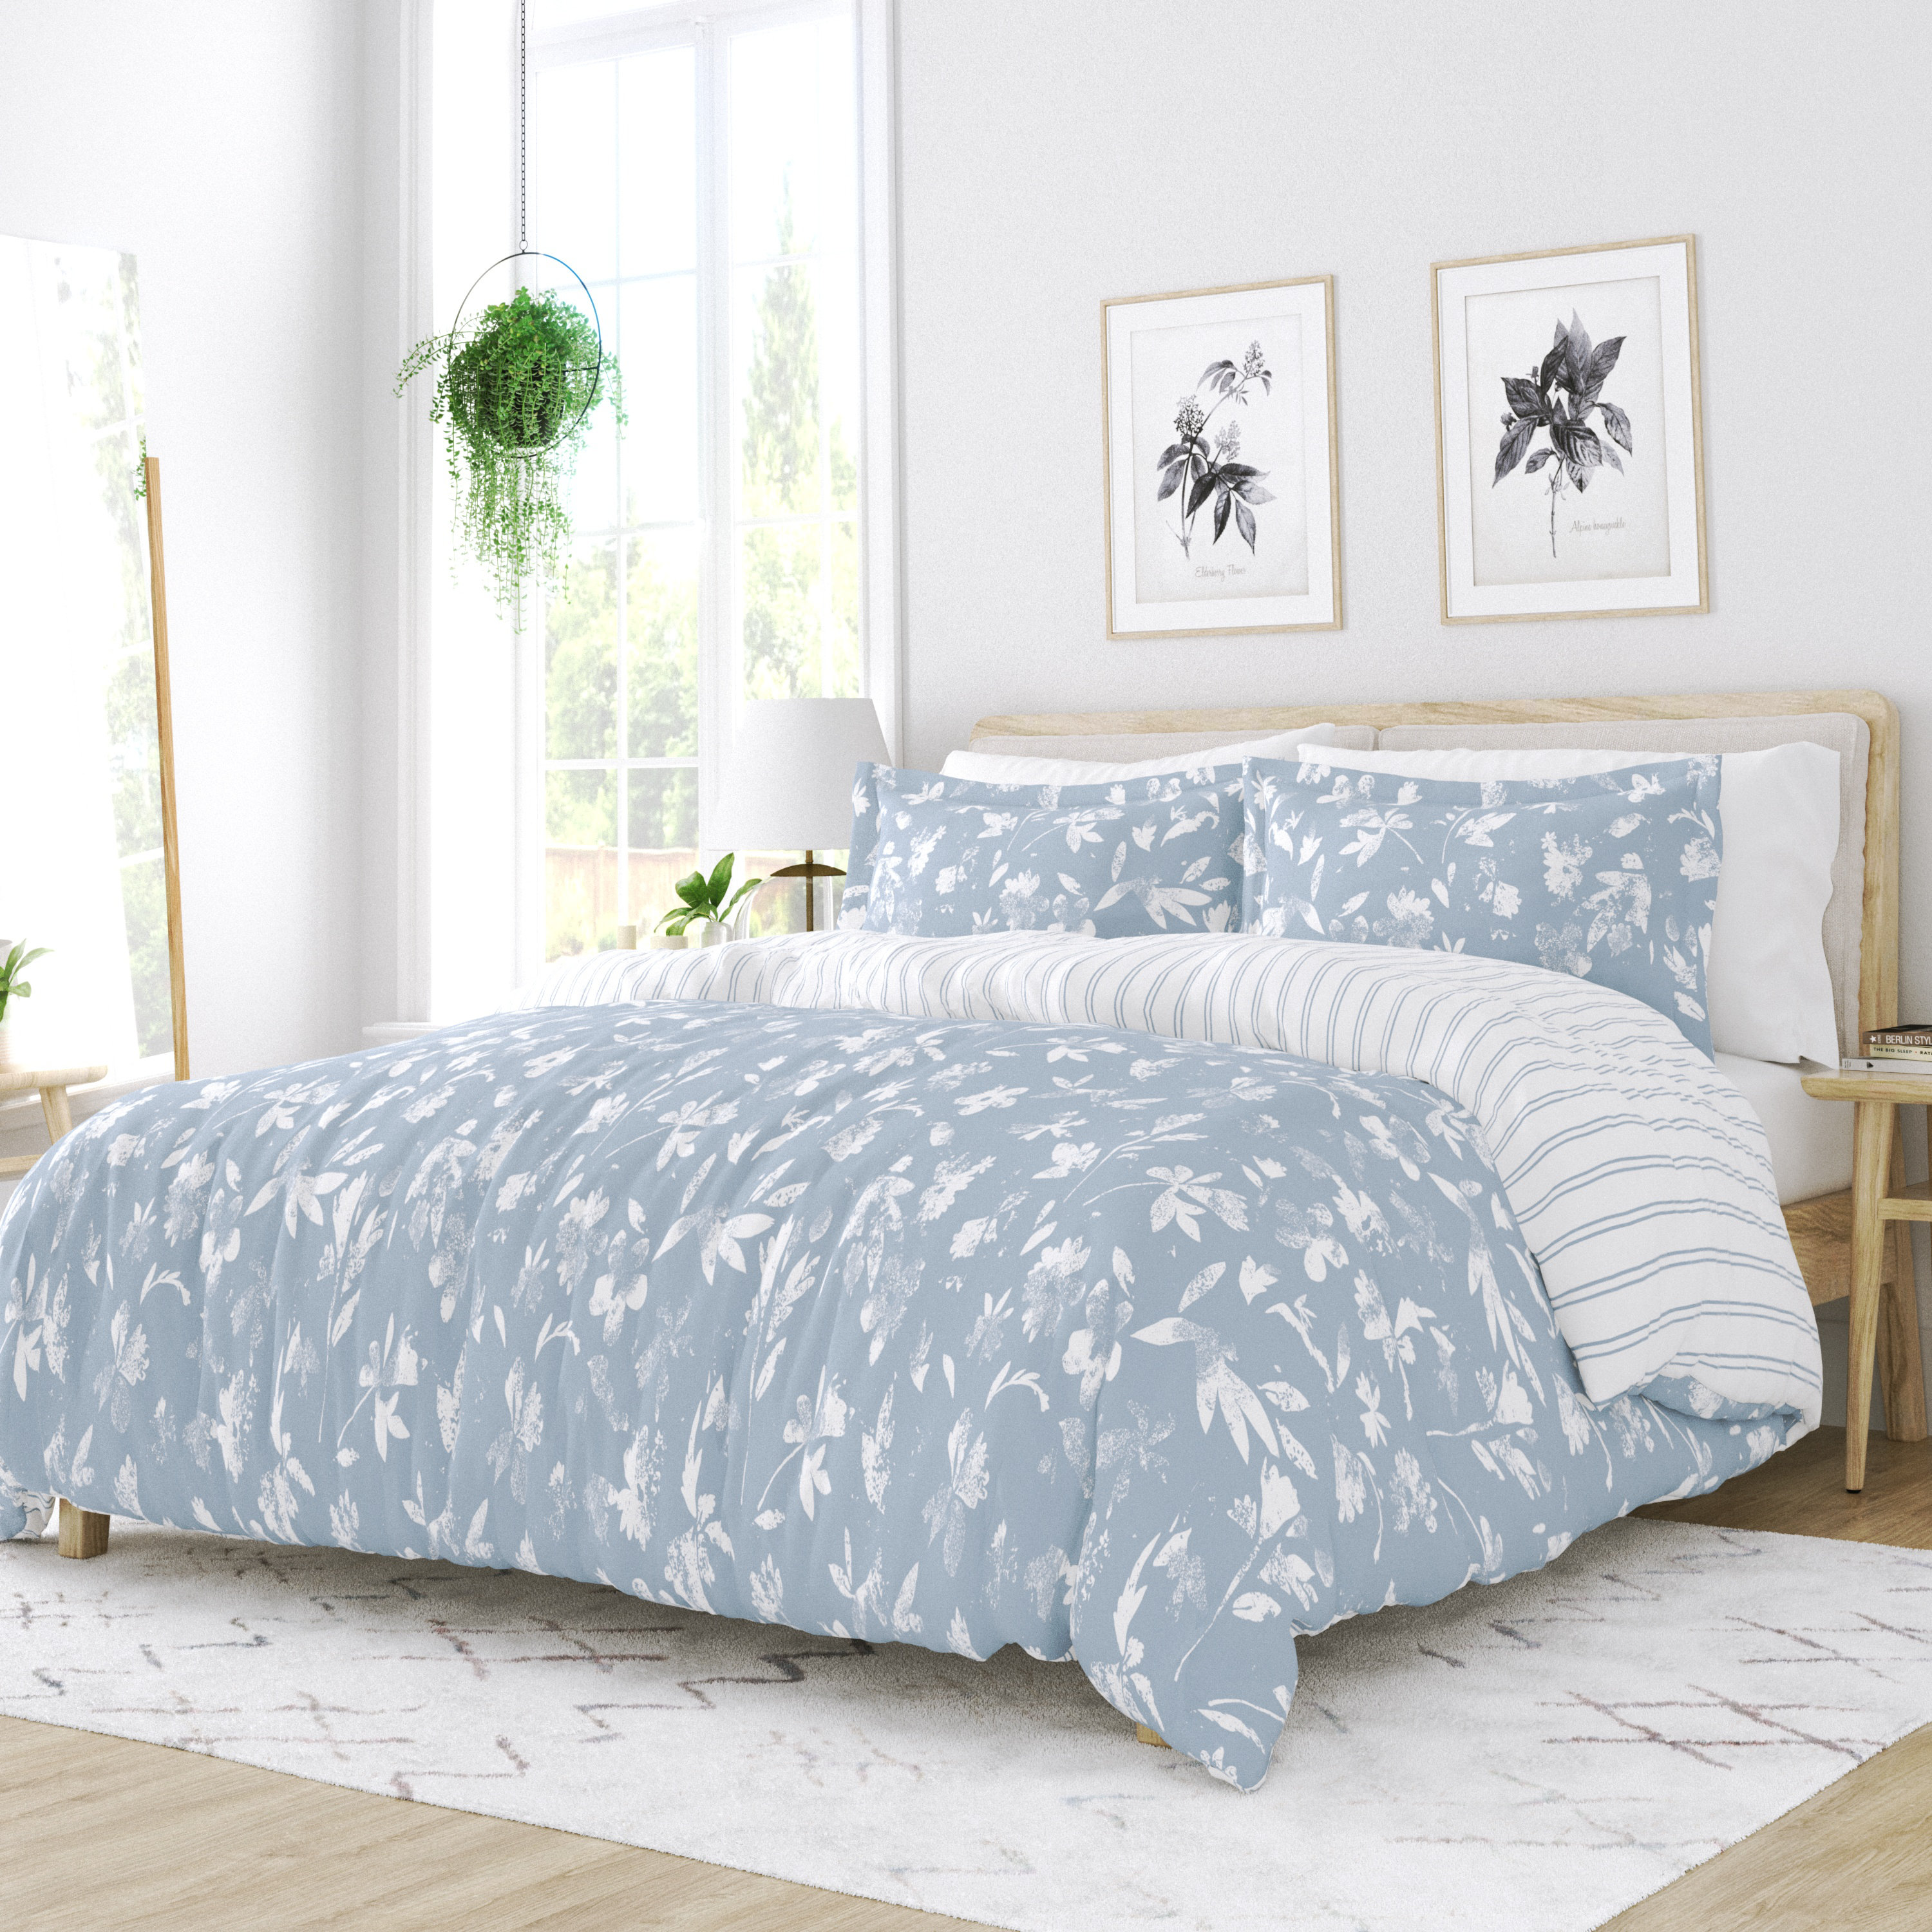 Floral Comforters & Sets - Wayfair Canada